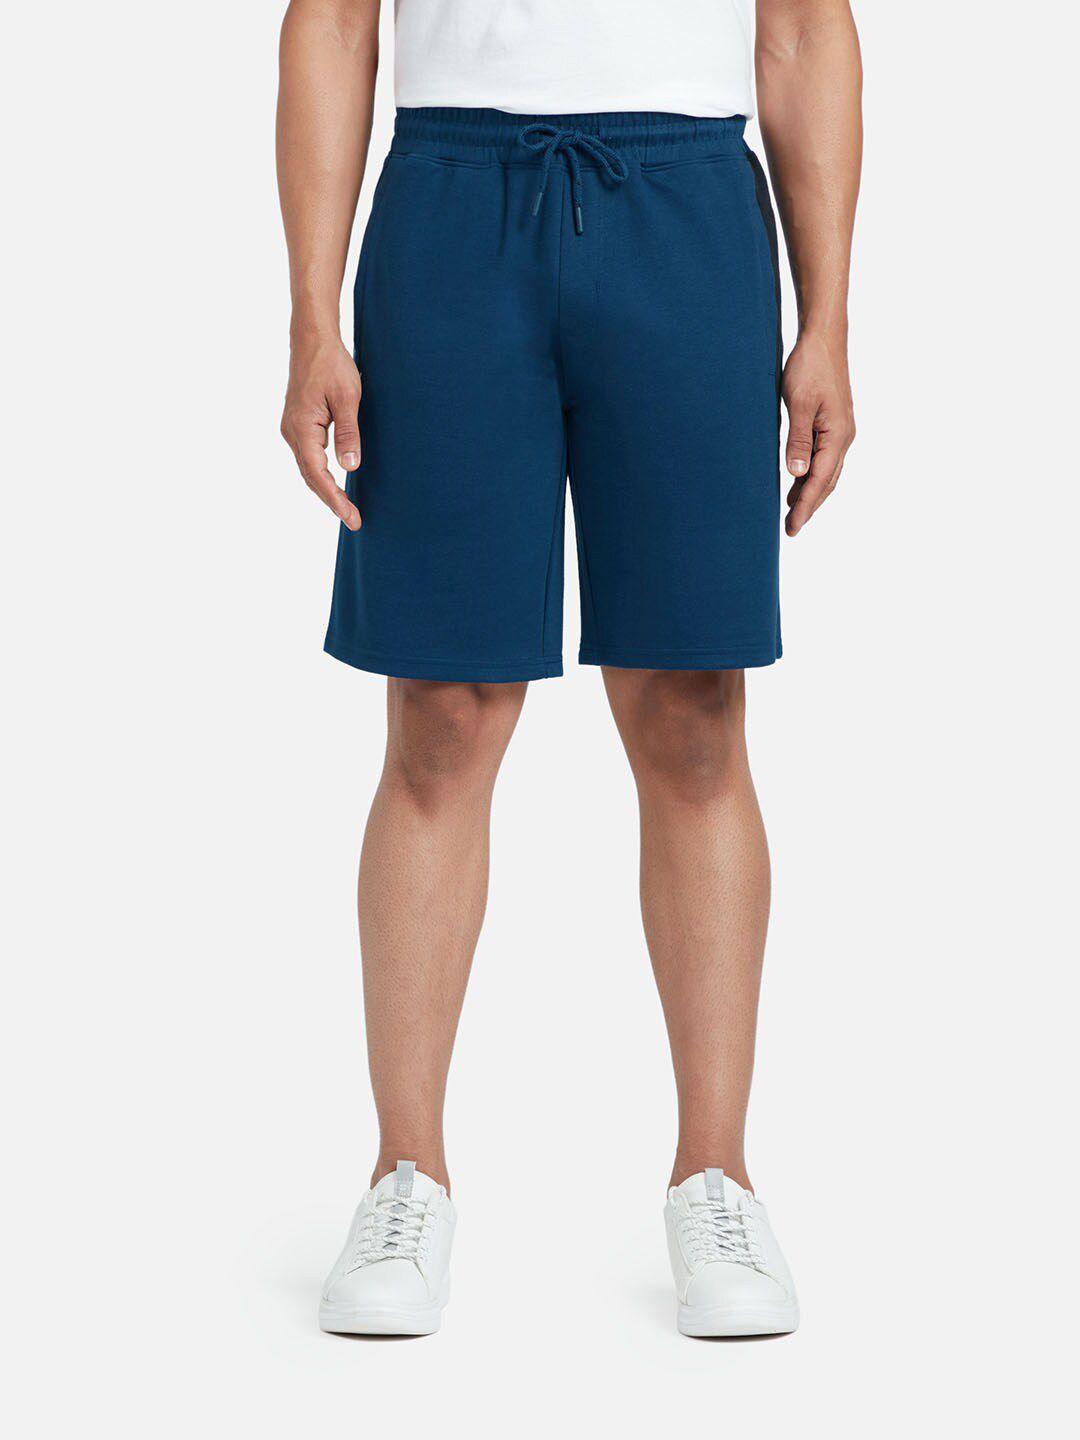 xyxx-men-teal-blue-solid-cotton-regular-shorts